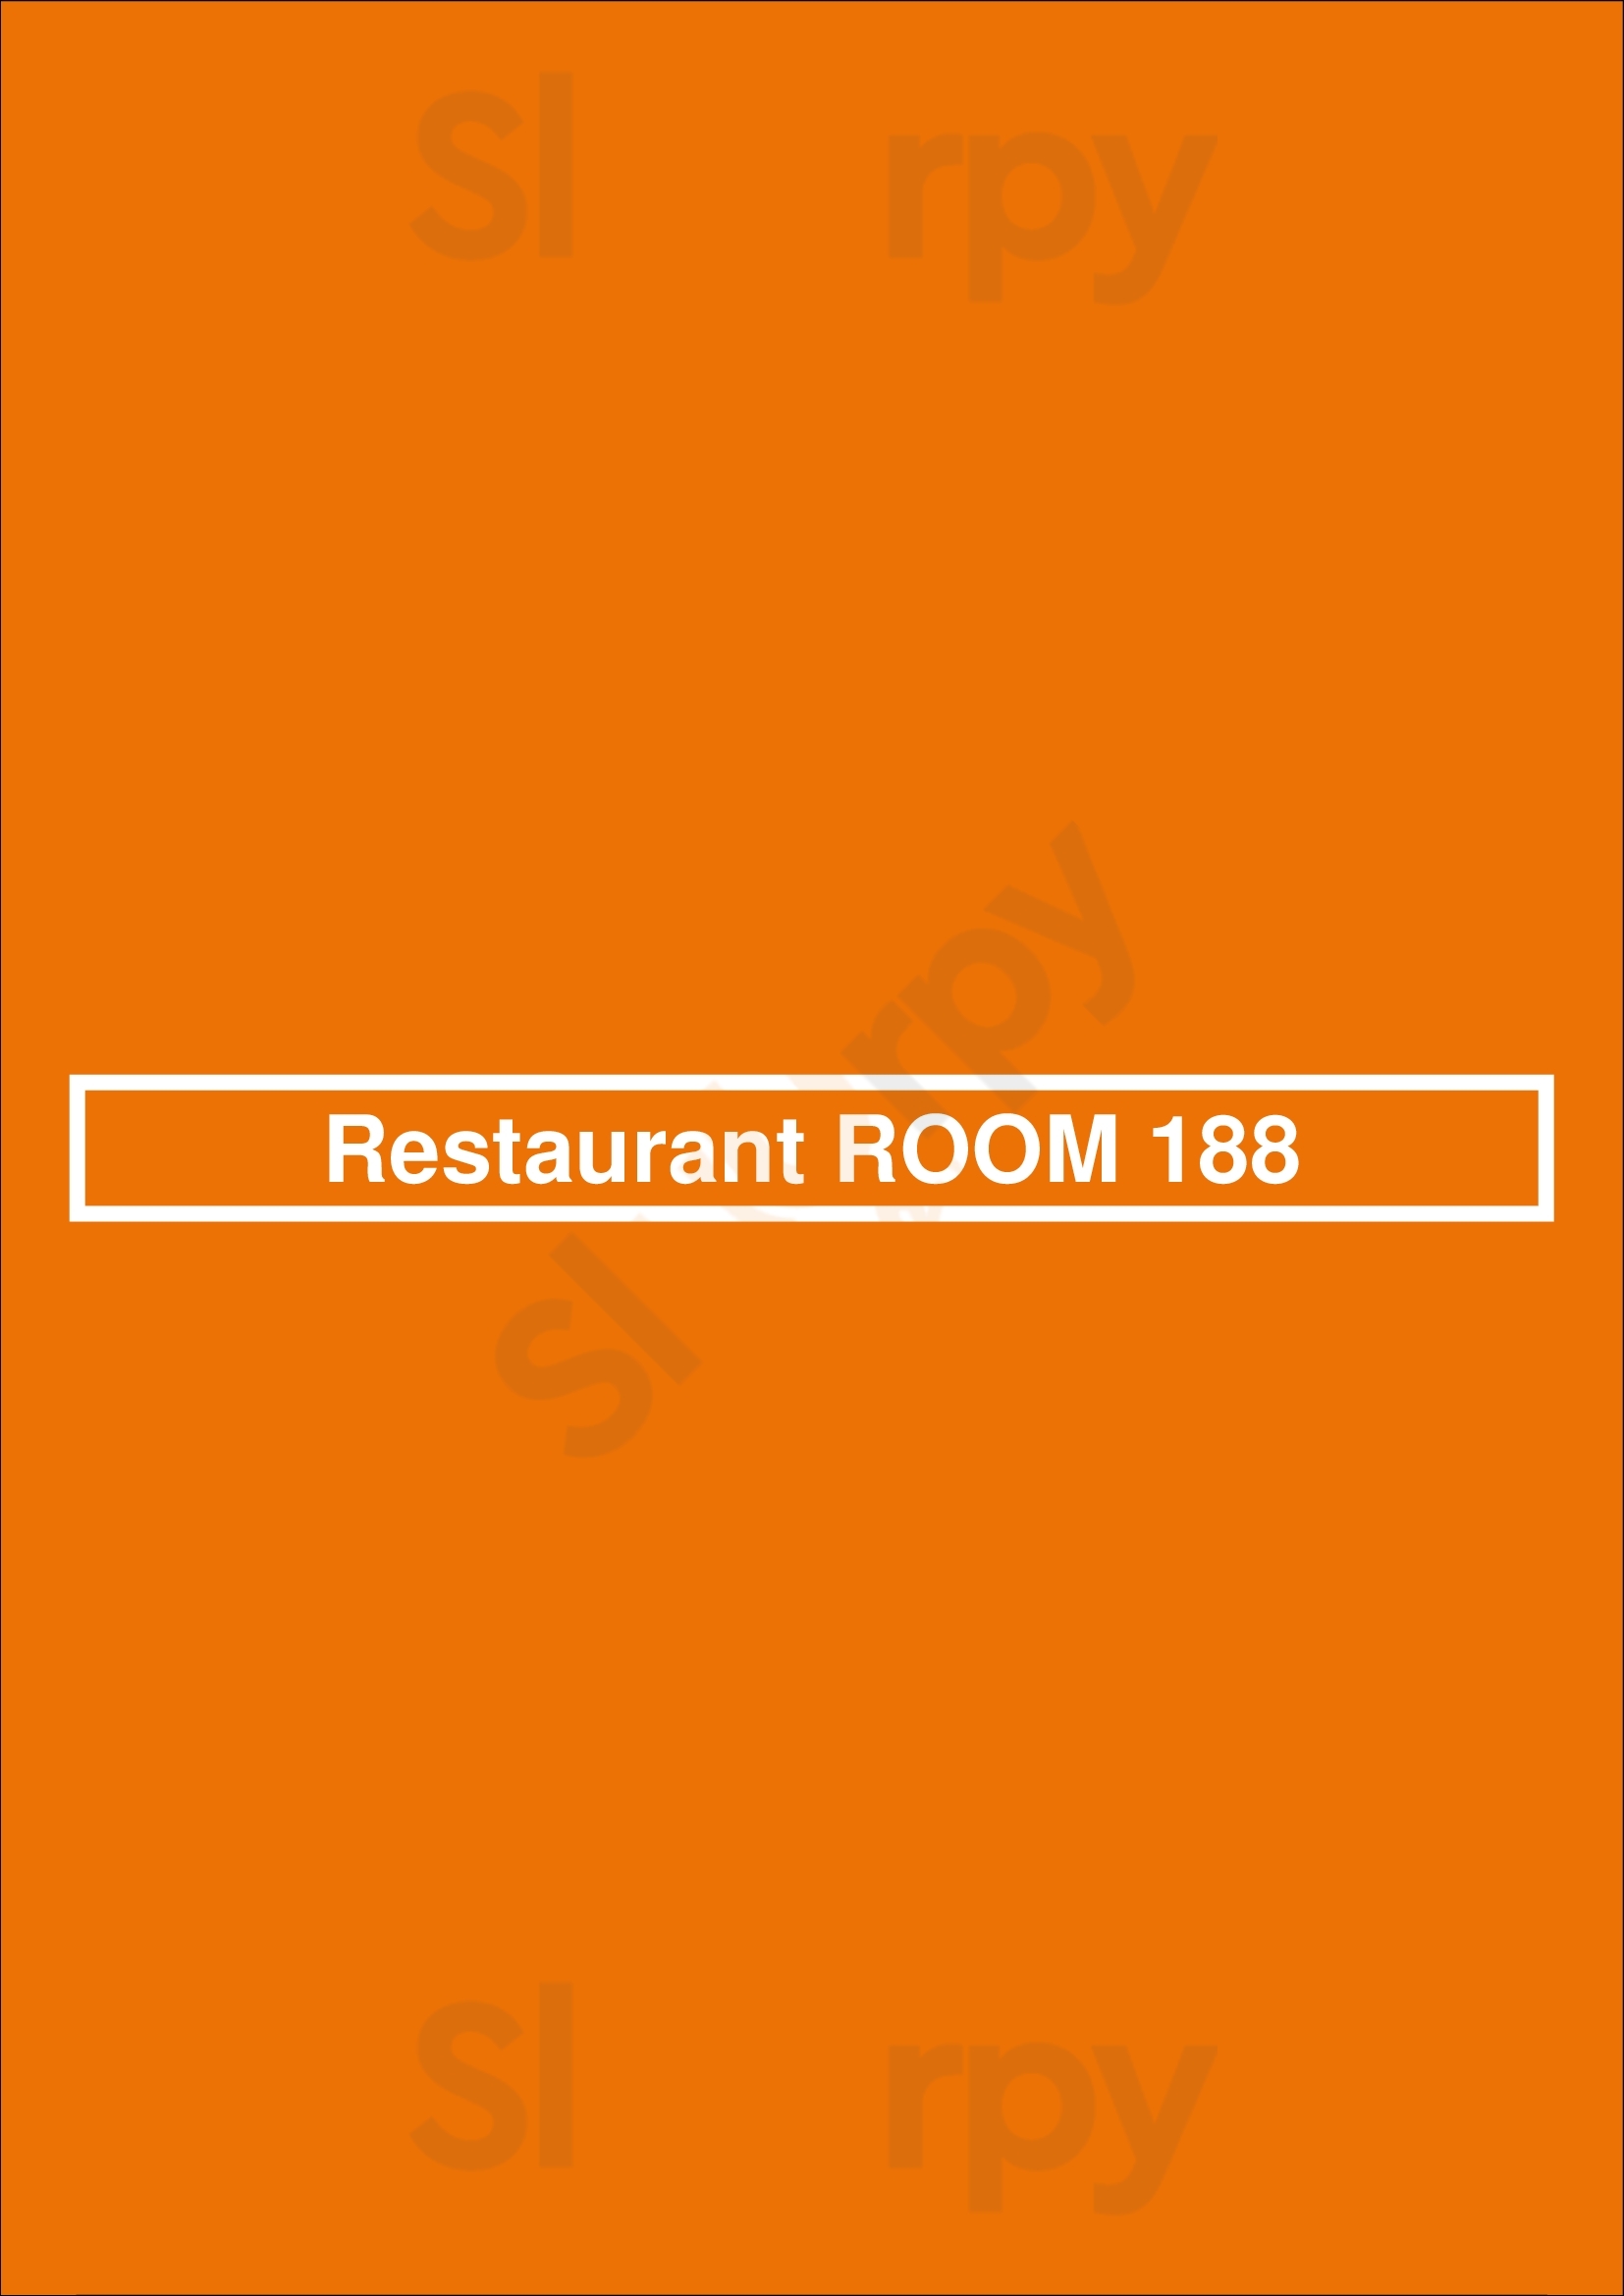 Restaurant Room 188 Roermond Menu - 1